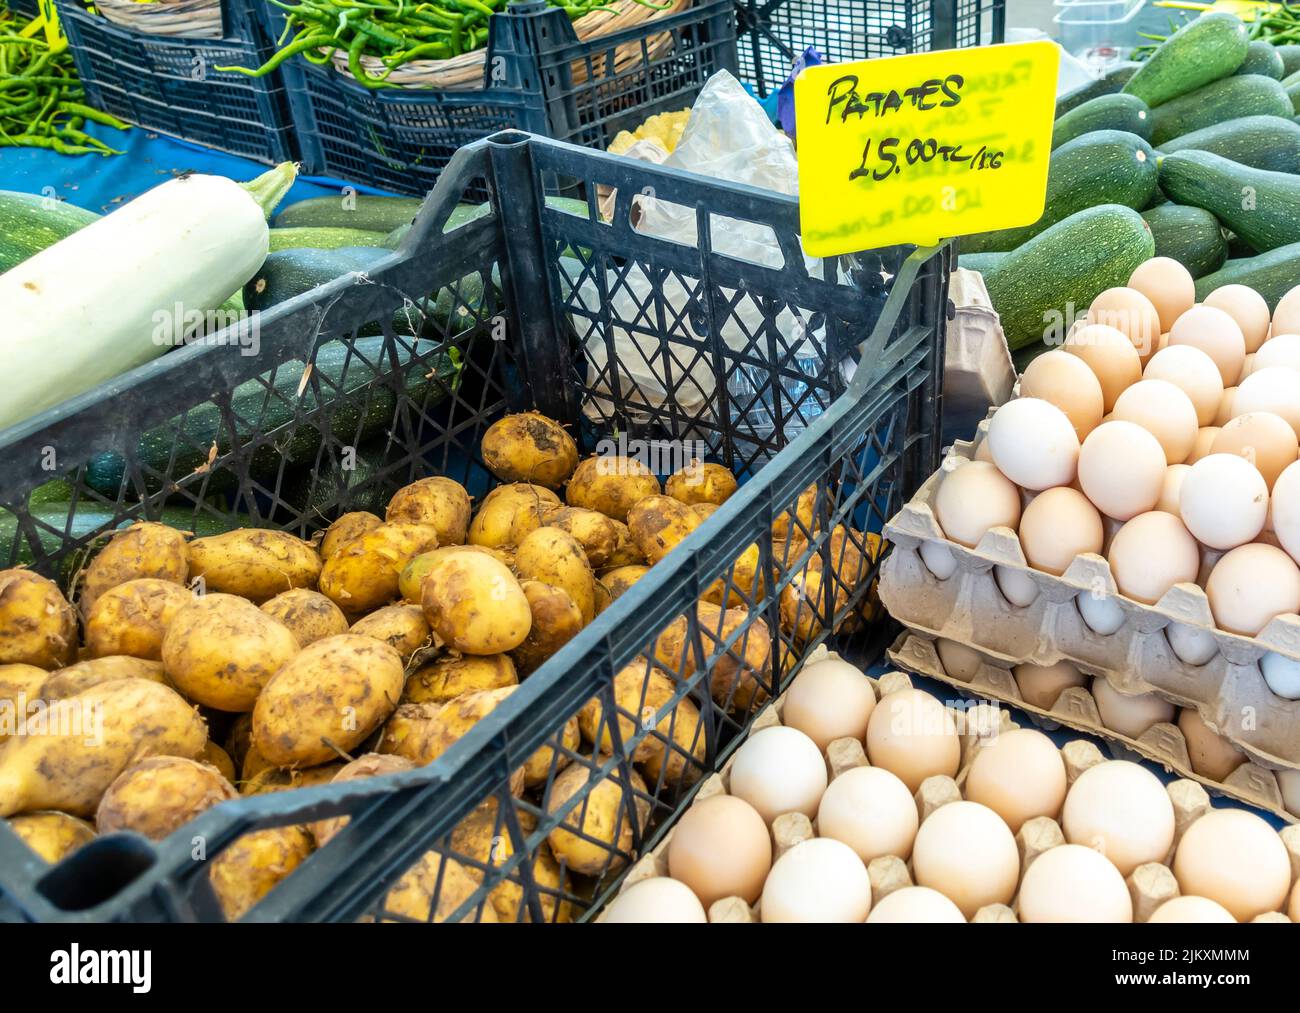 Eggs and potatoes sold at Tuesday market (Salı Pazarı) in Istanbul, Turkey Stock Photo